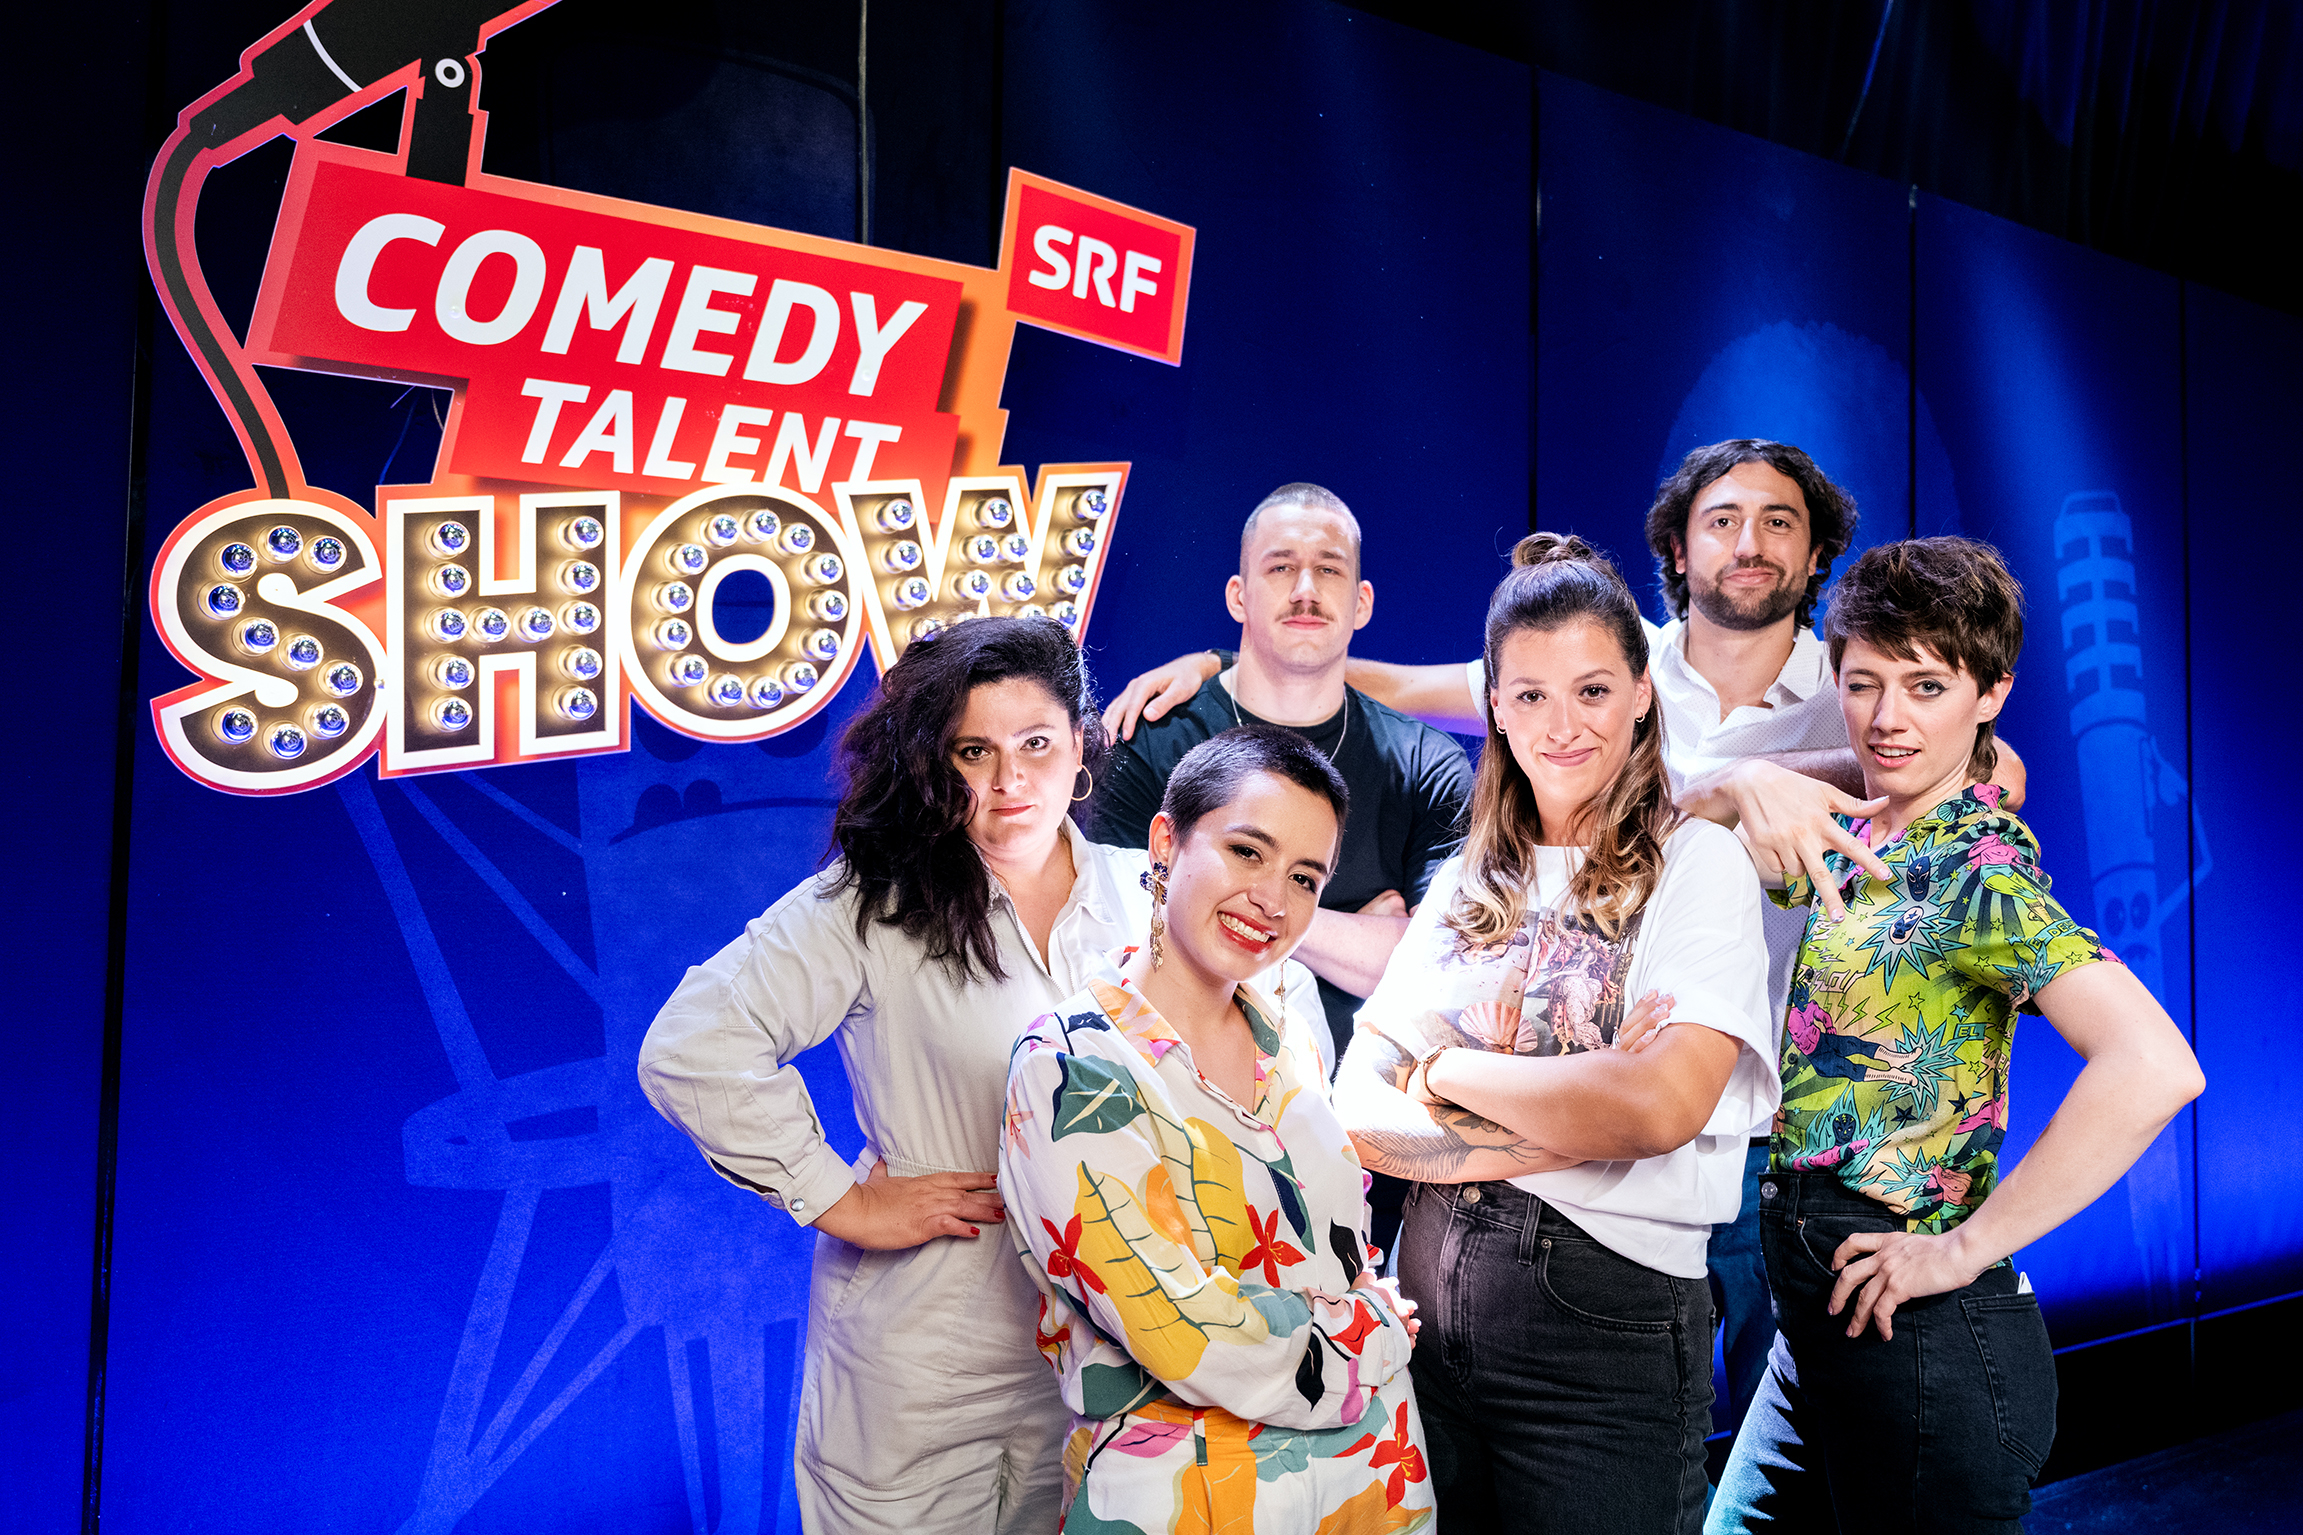 Comedy Talent Show Staffel 2021 Folge 1 Hinten: Mateo Gudenrath, Sven Ivanic Vorne: Rebekka Lindauer, Caro Knaack, Lisa Christ, Jane Mumford